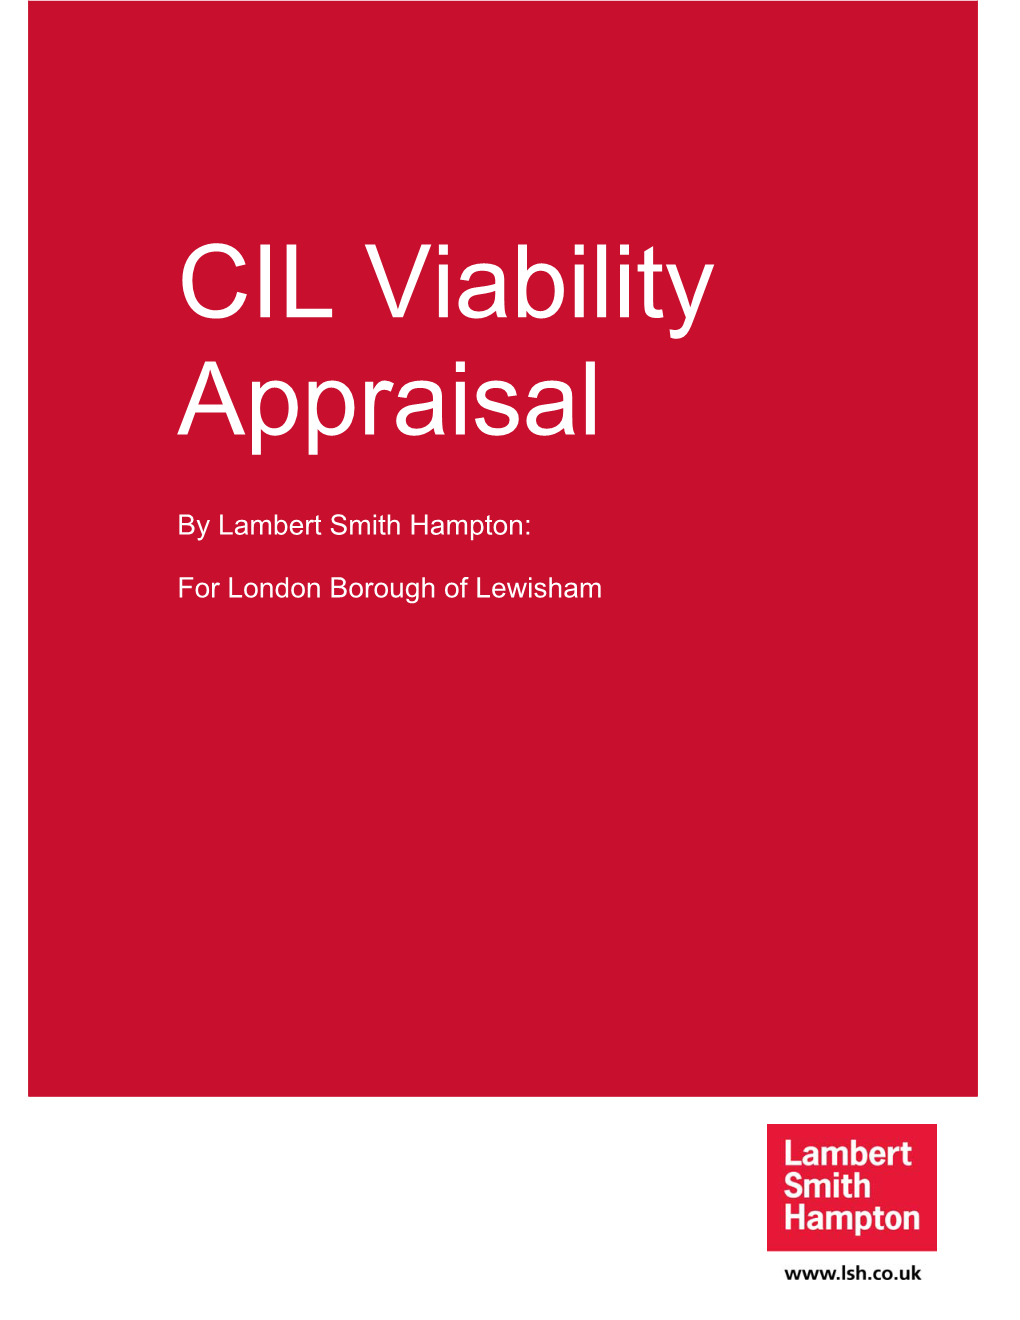 CIL Viability Appraisal